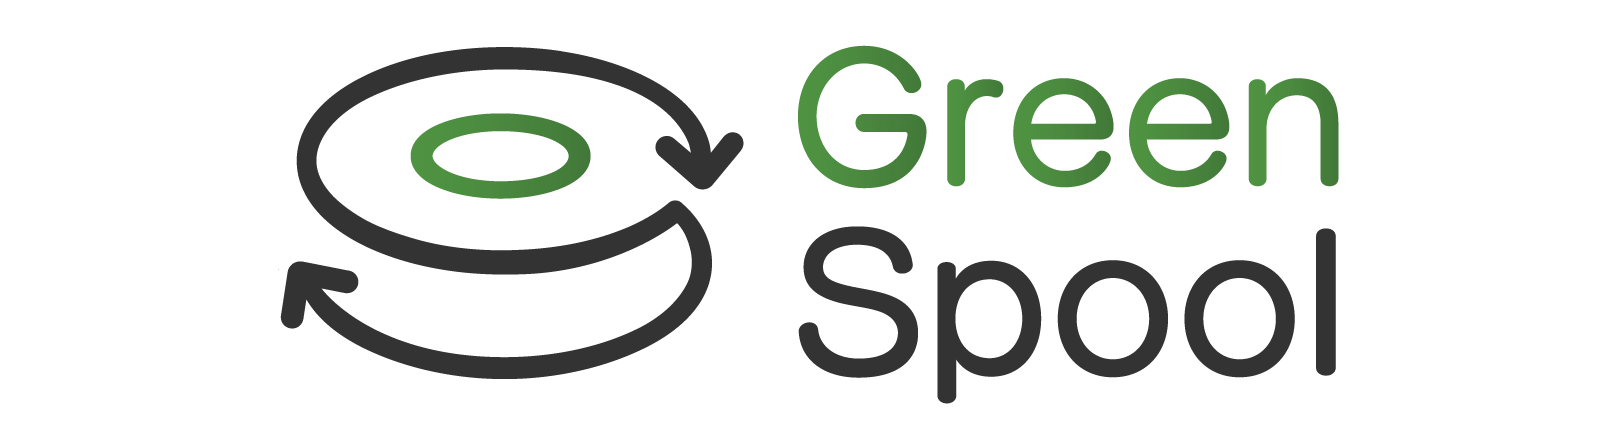 green-spool